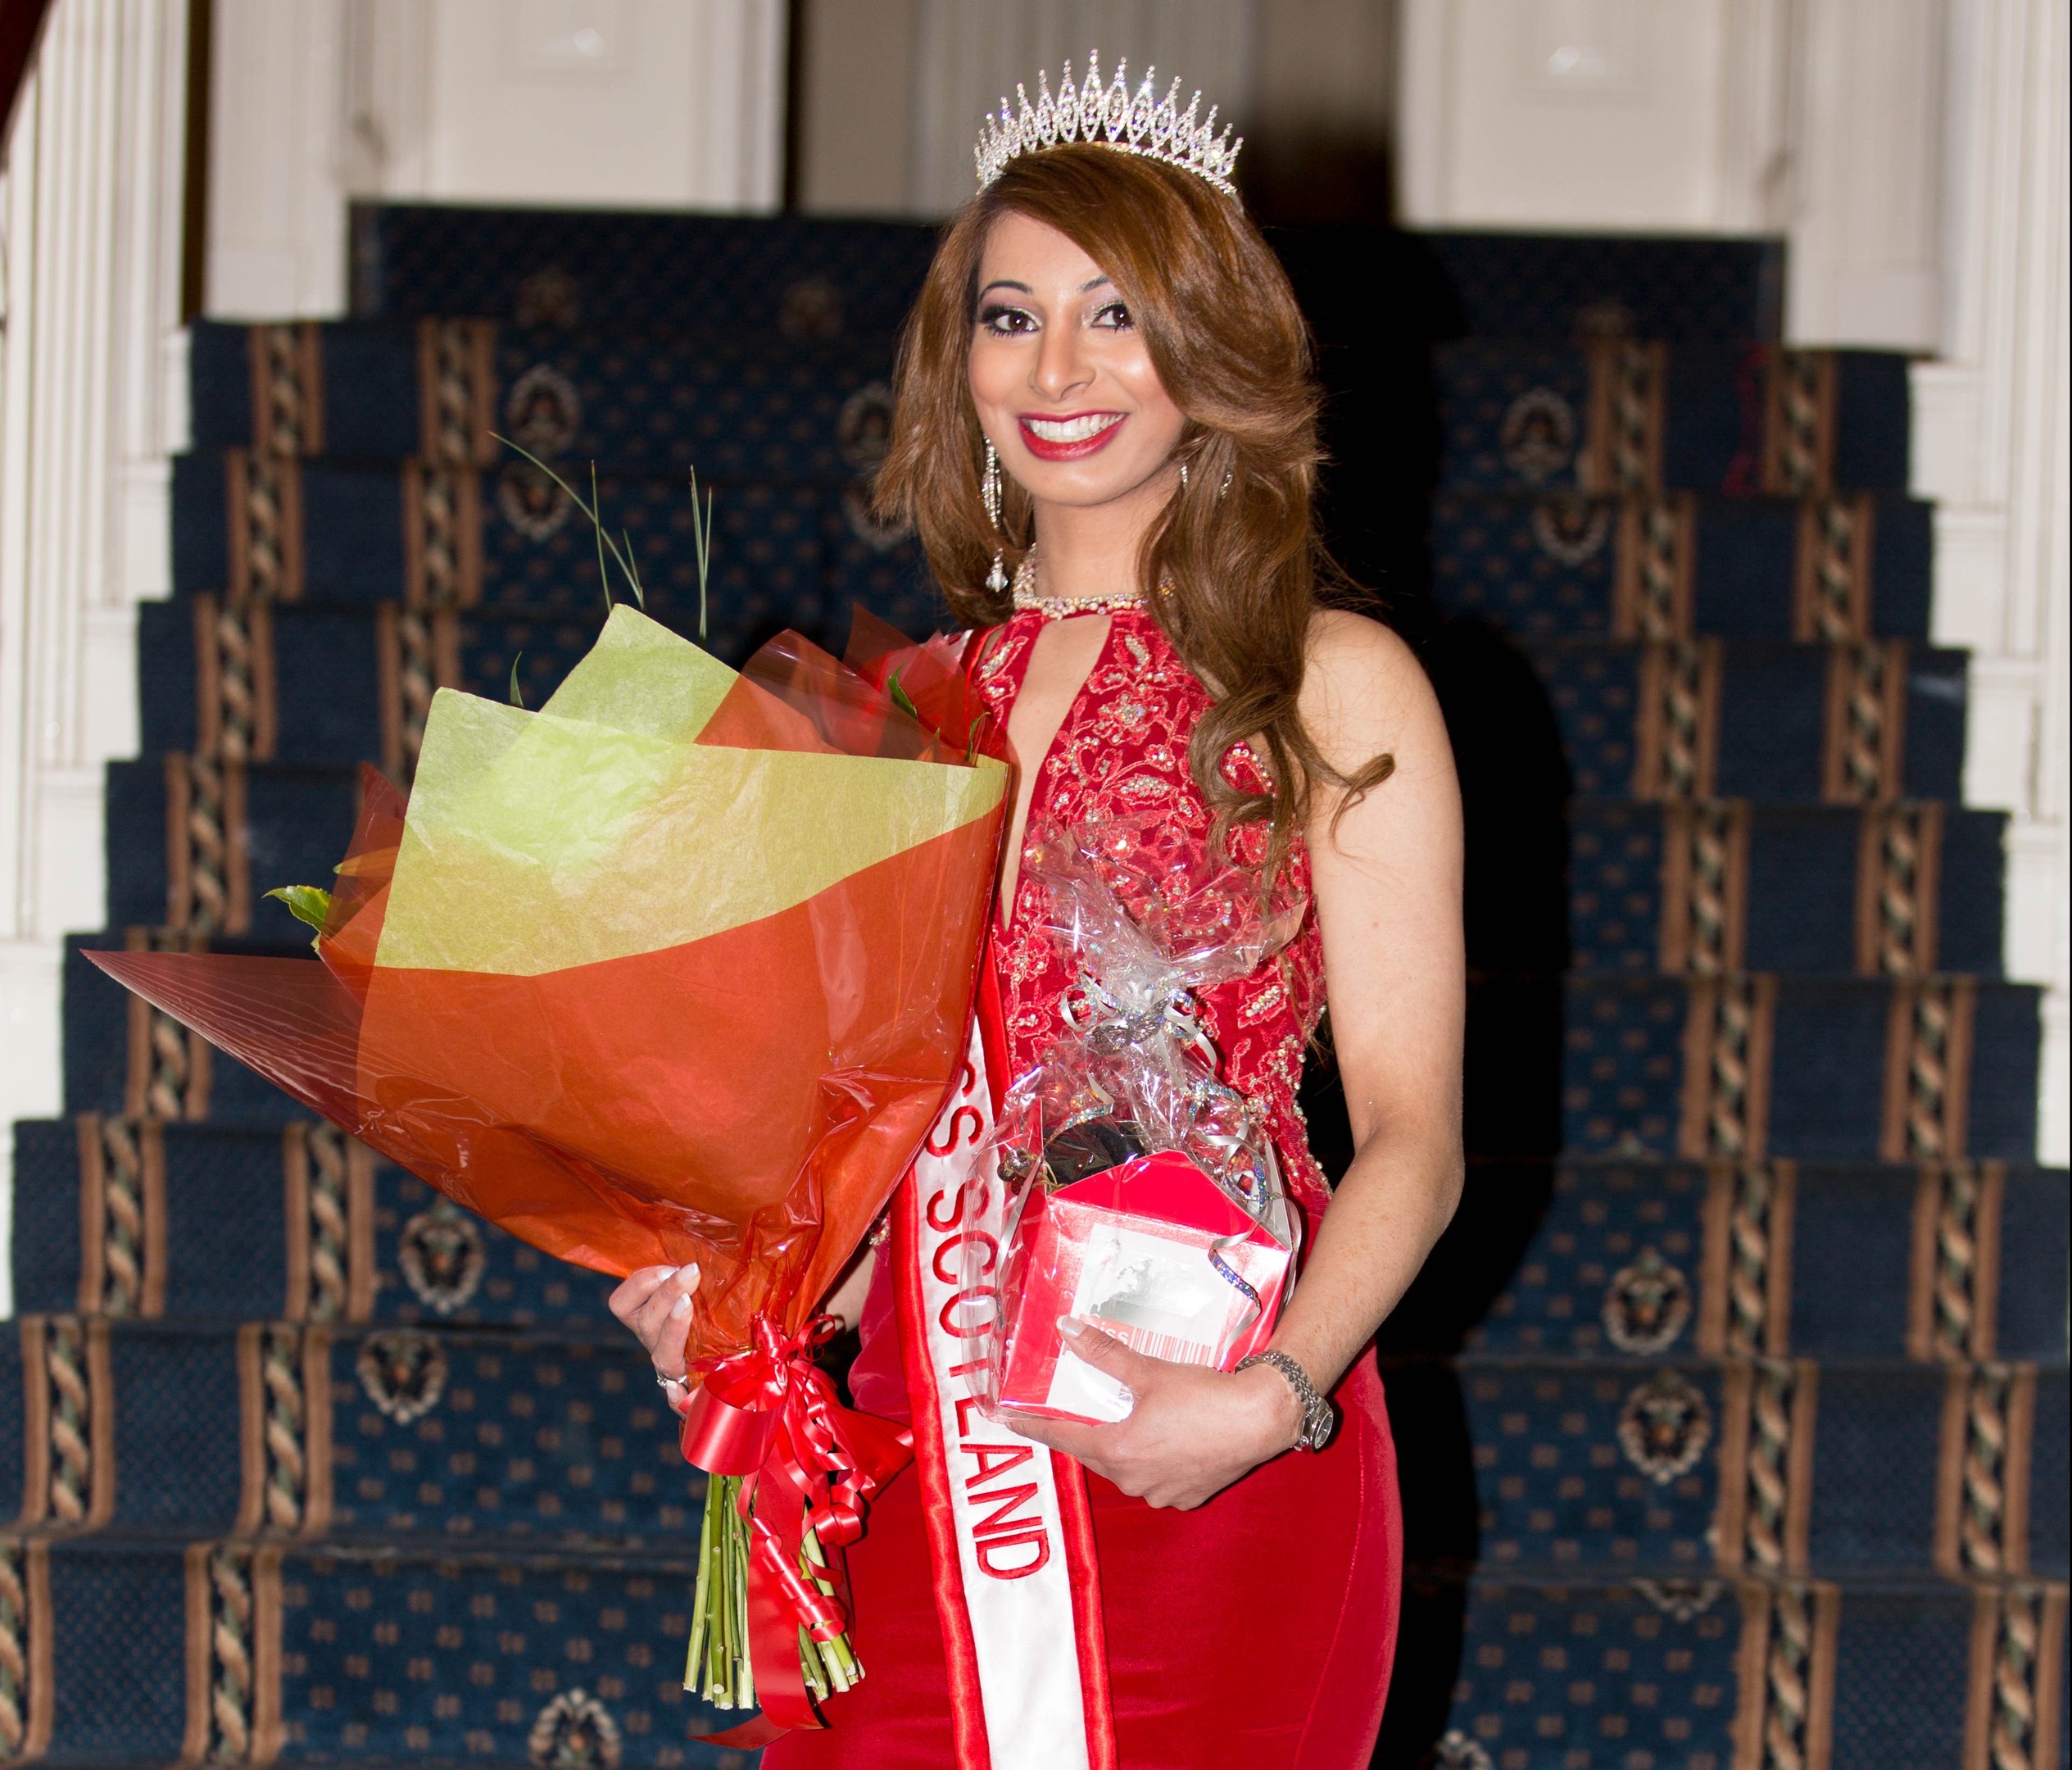 Madiha Iqbal posing triumphantly after becoming Miss Progress Scotland